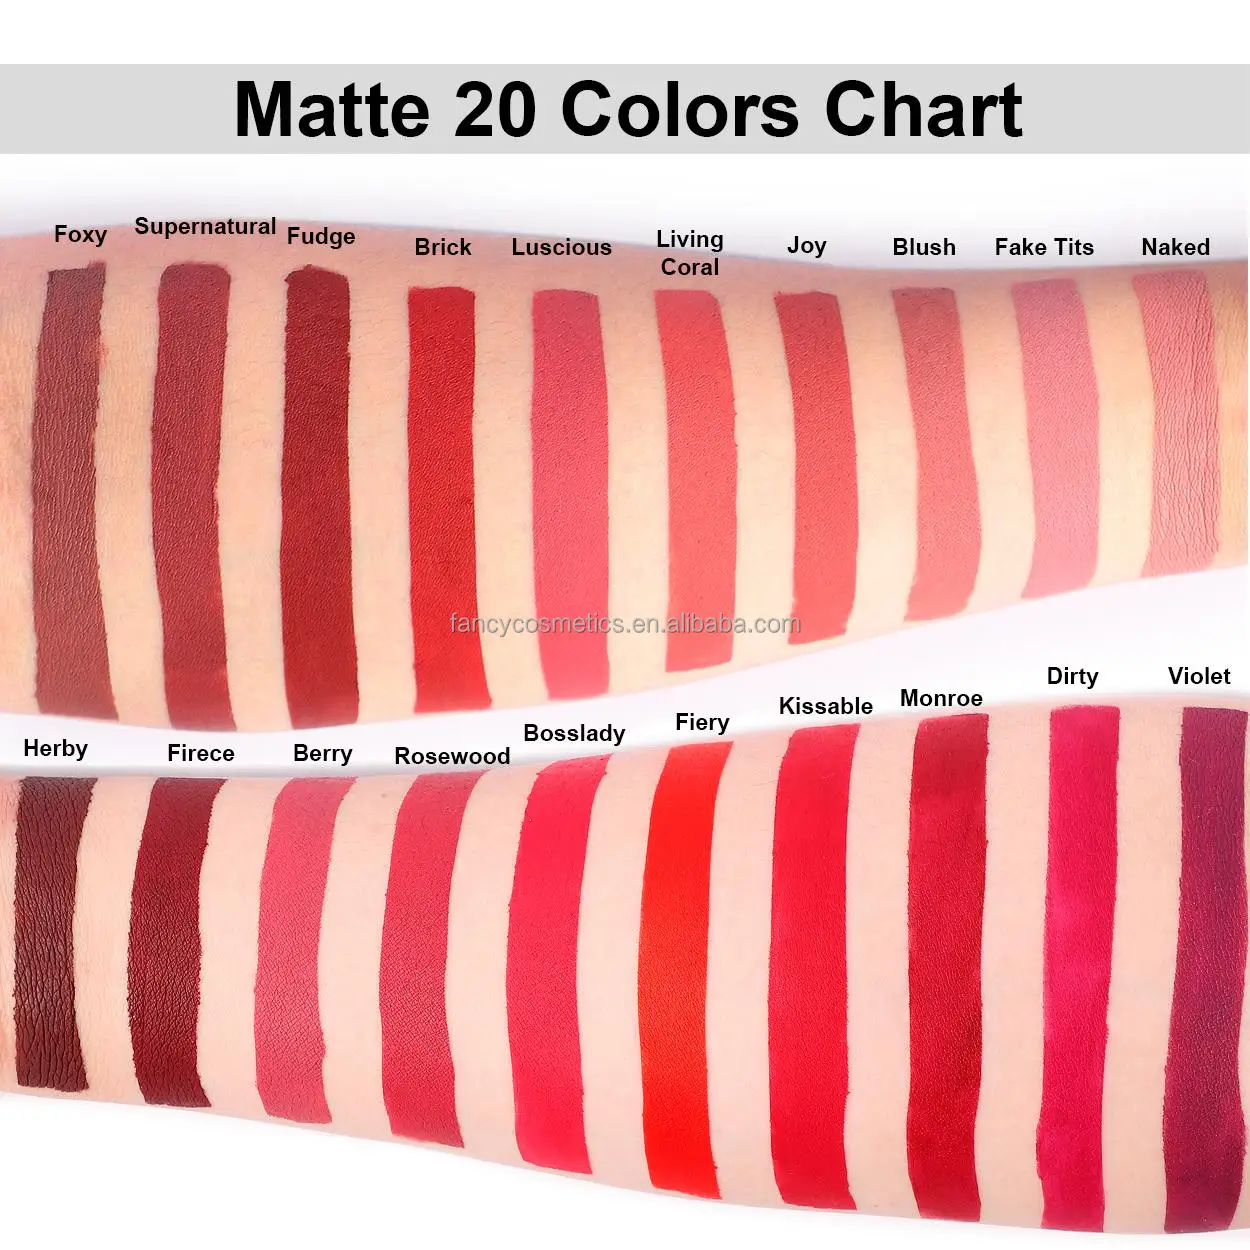 Matte 20 Colors Chart.jpg